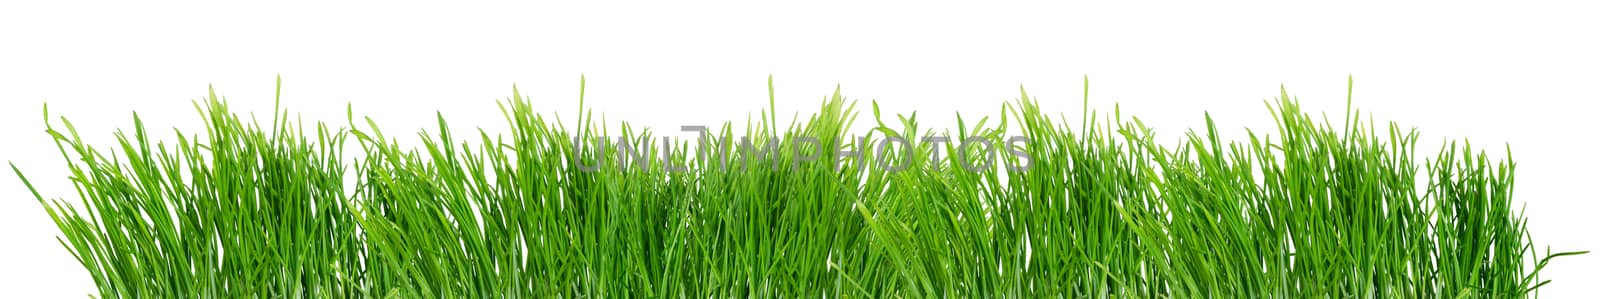 Green grass by Valengilda